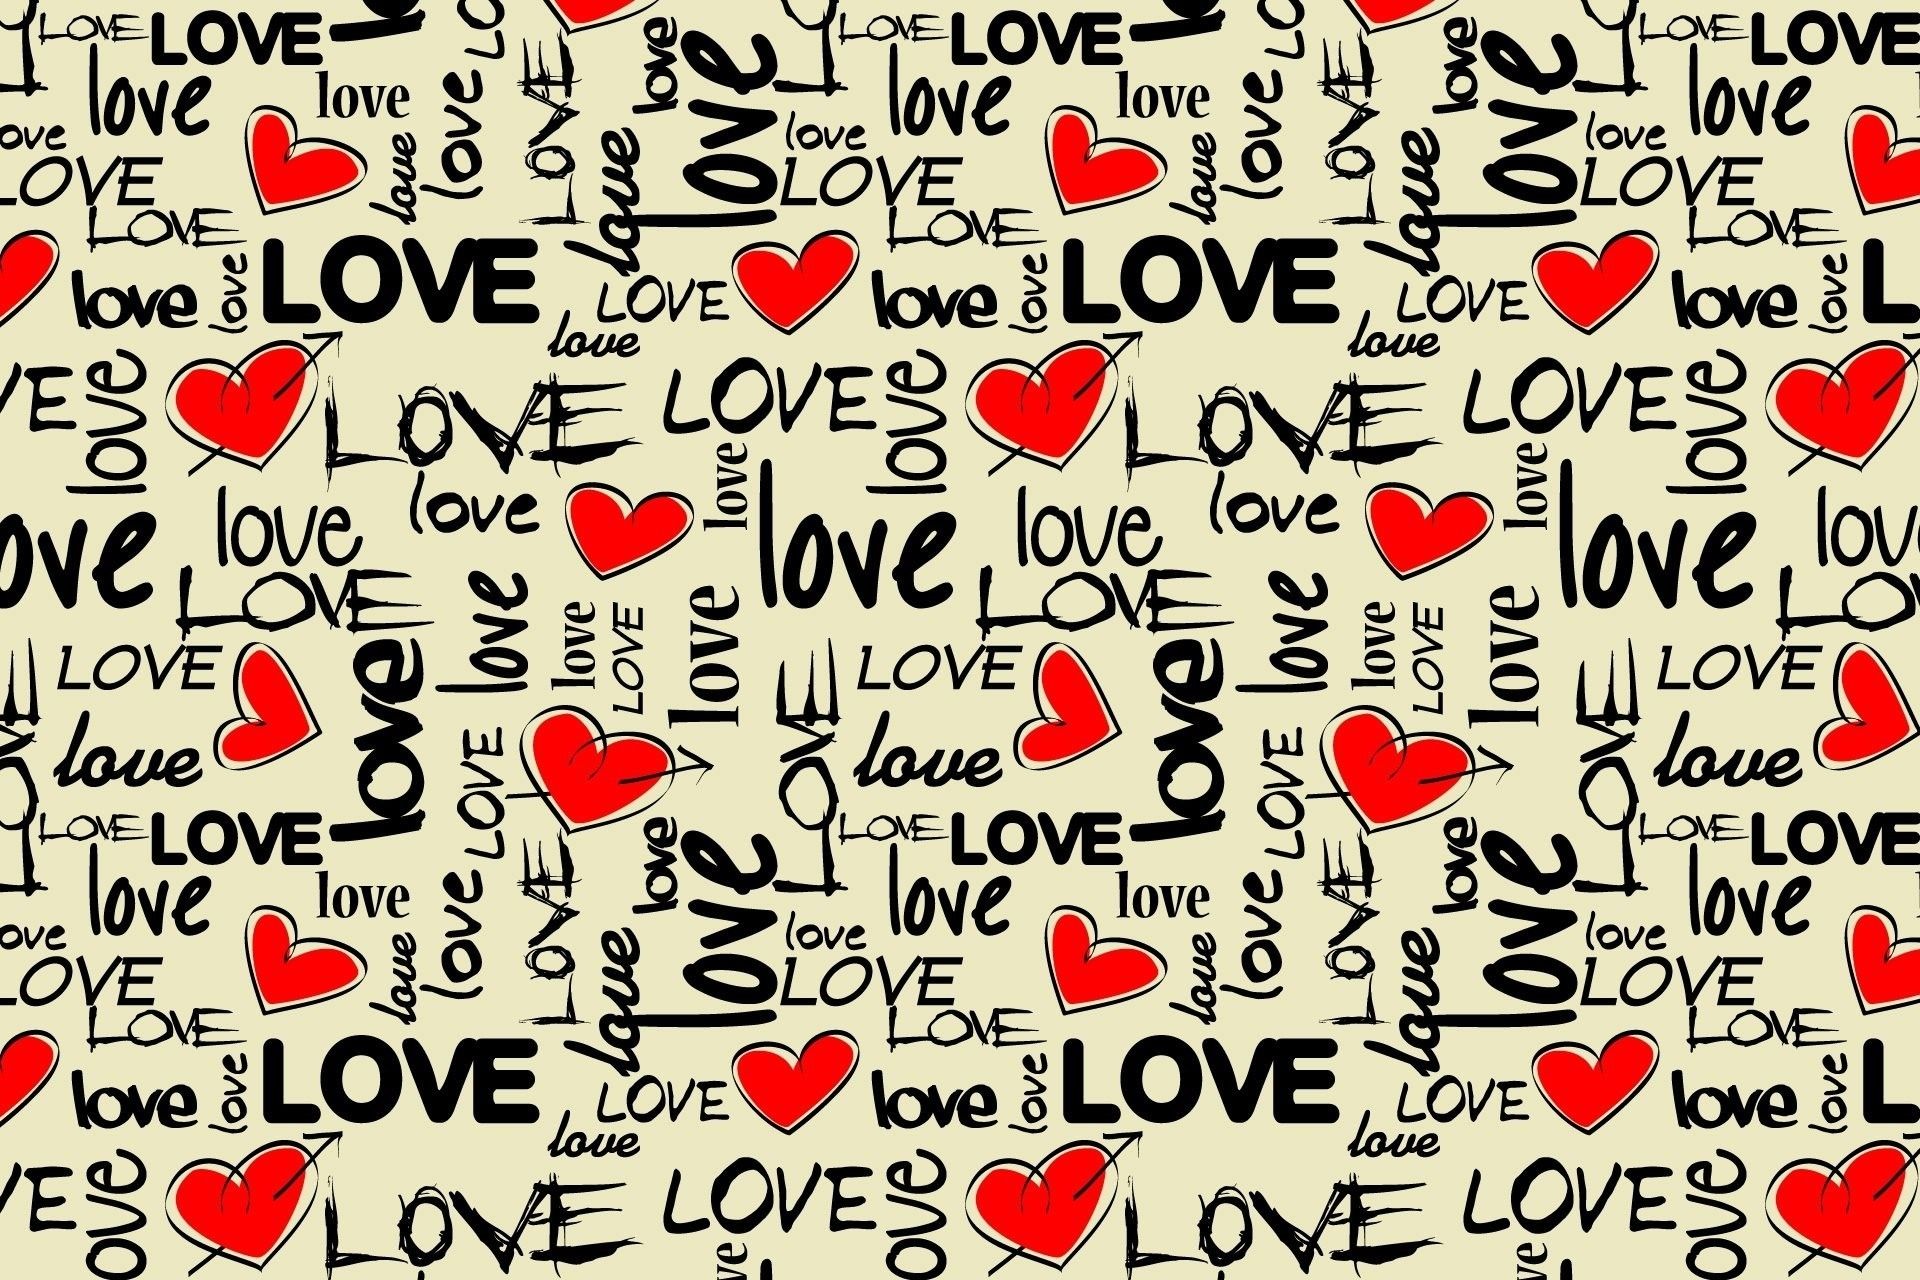 Love Is Love Wallpapers